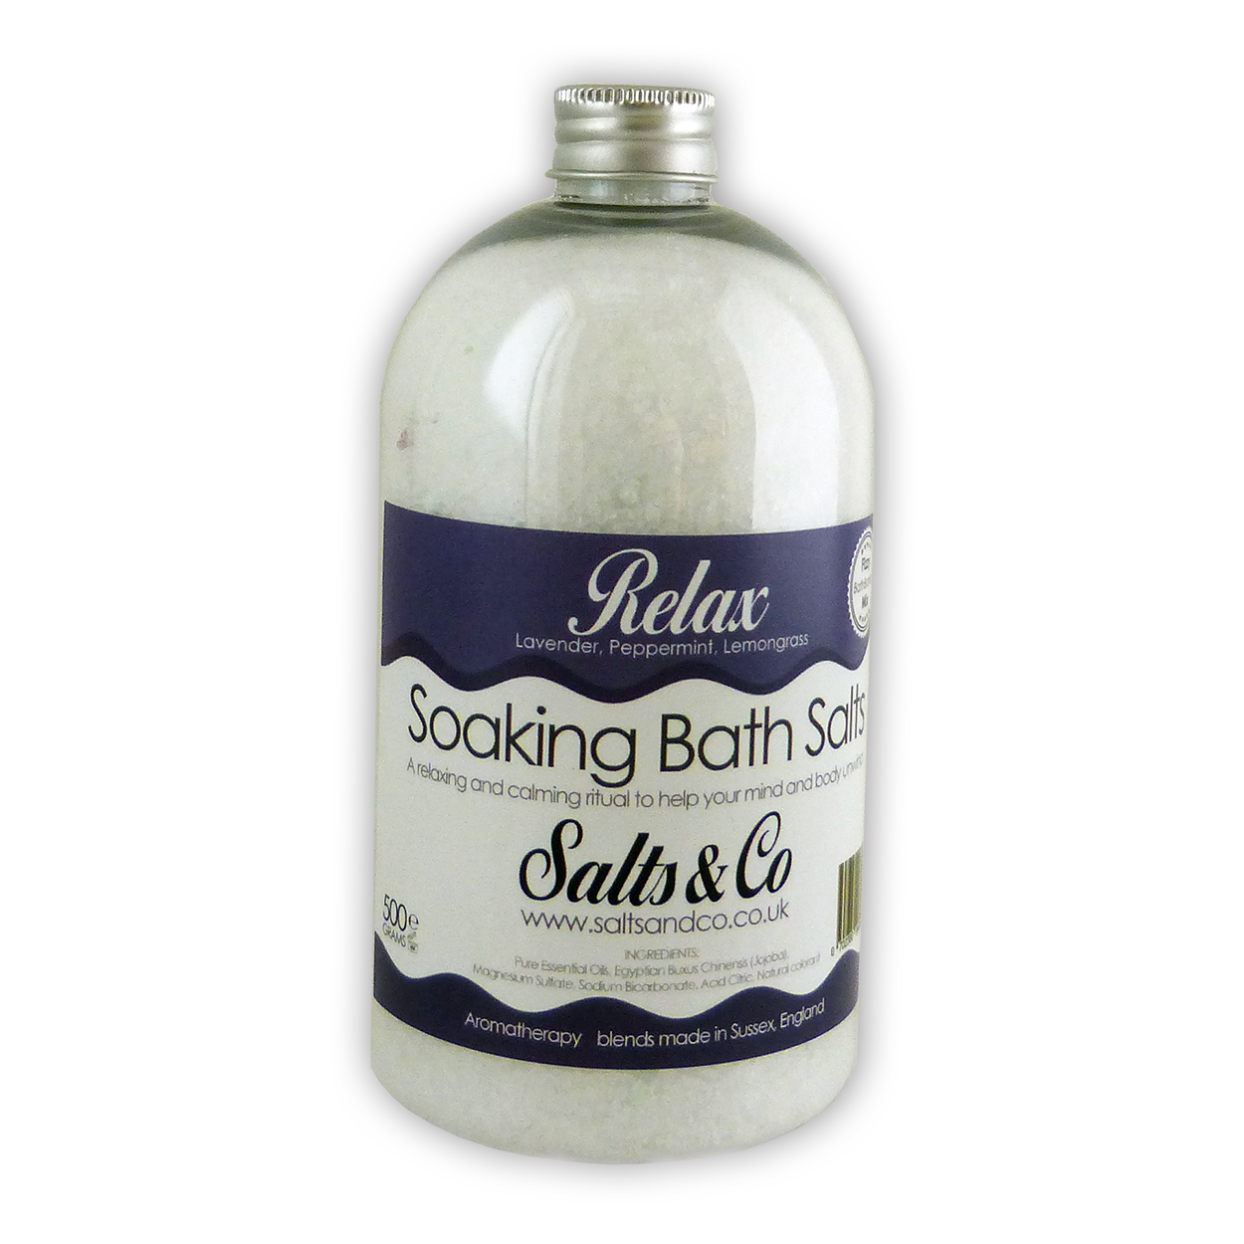 Relax Bath Salts by Salts & Co - Lavender. Peppermint & Lemongrass essential oils